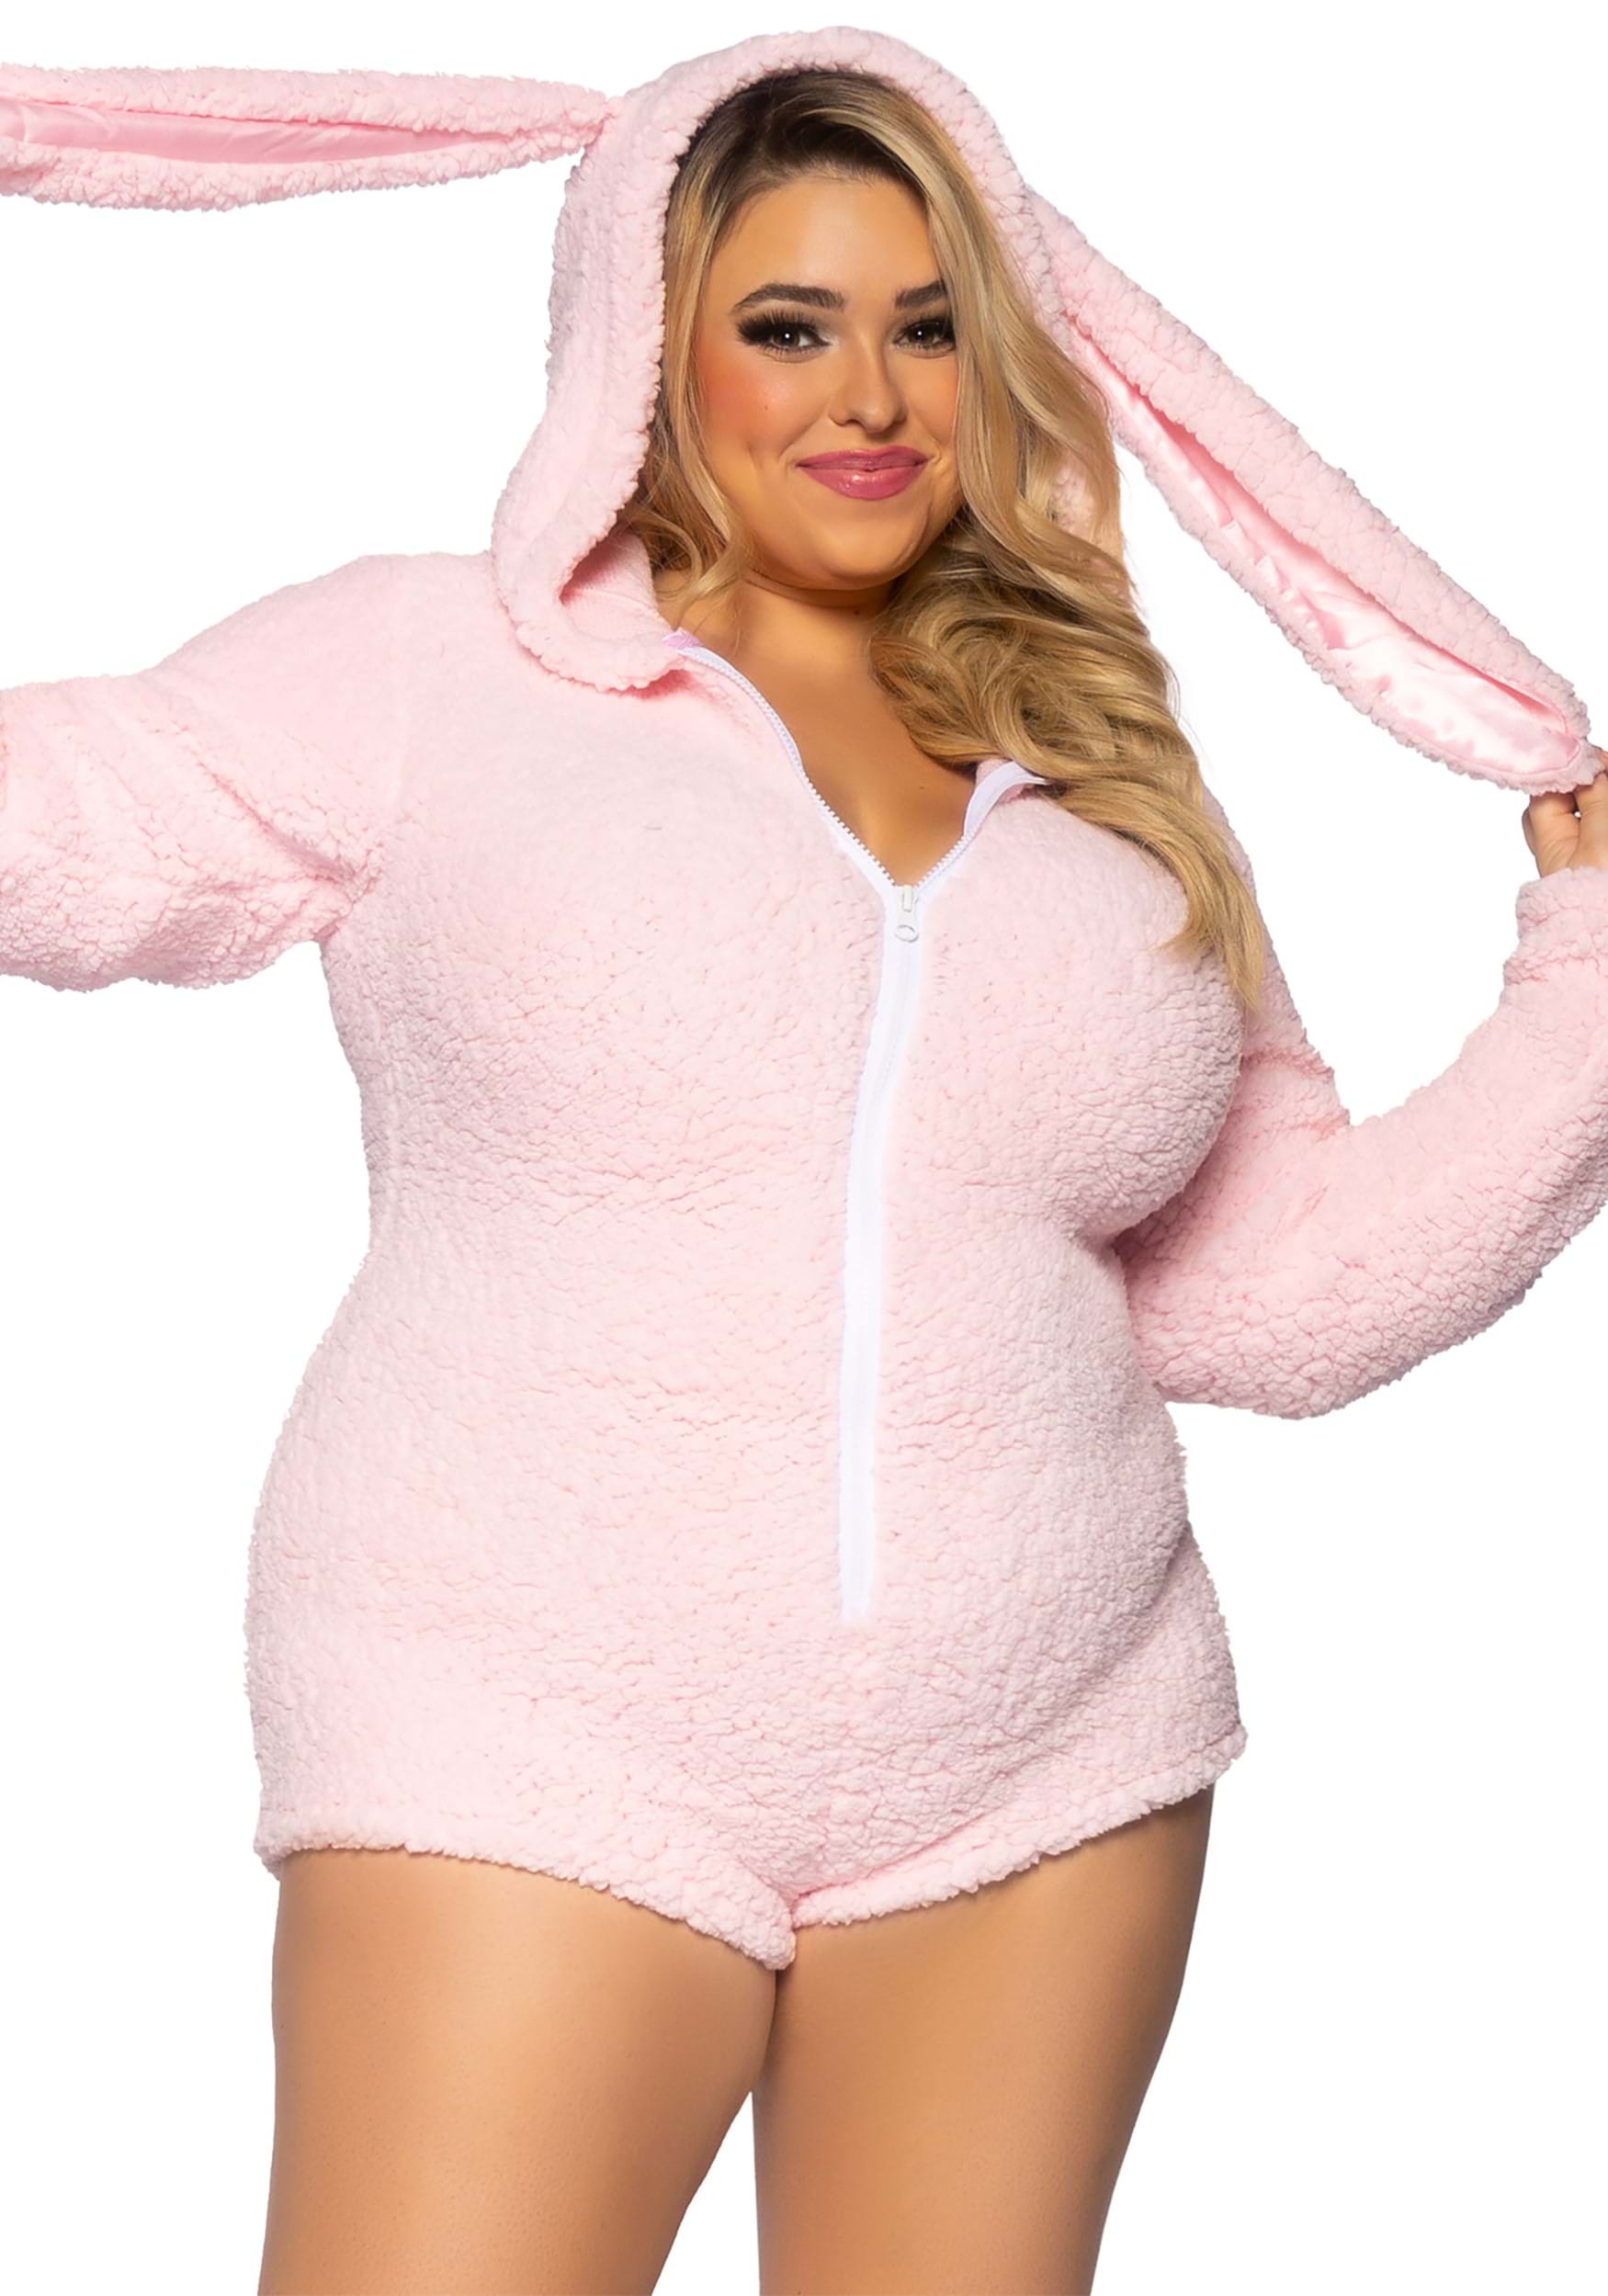 Women's Plus Size Cuddle Bunny Costume